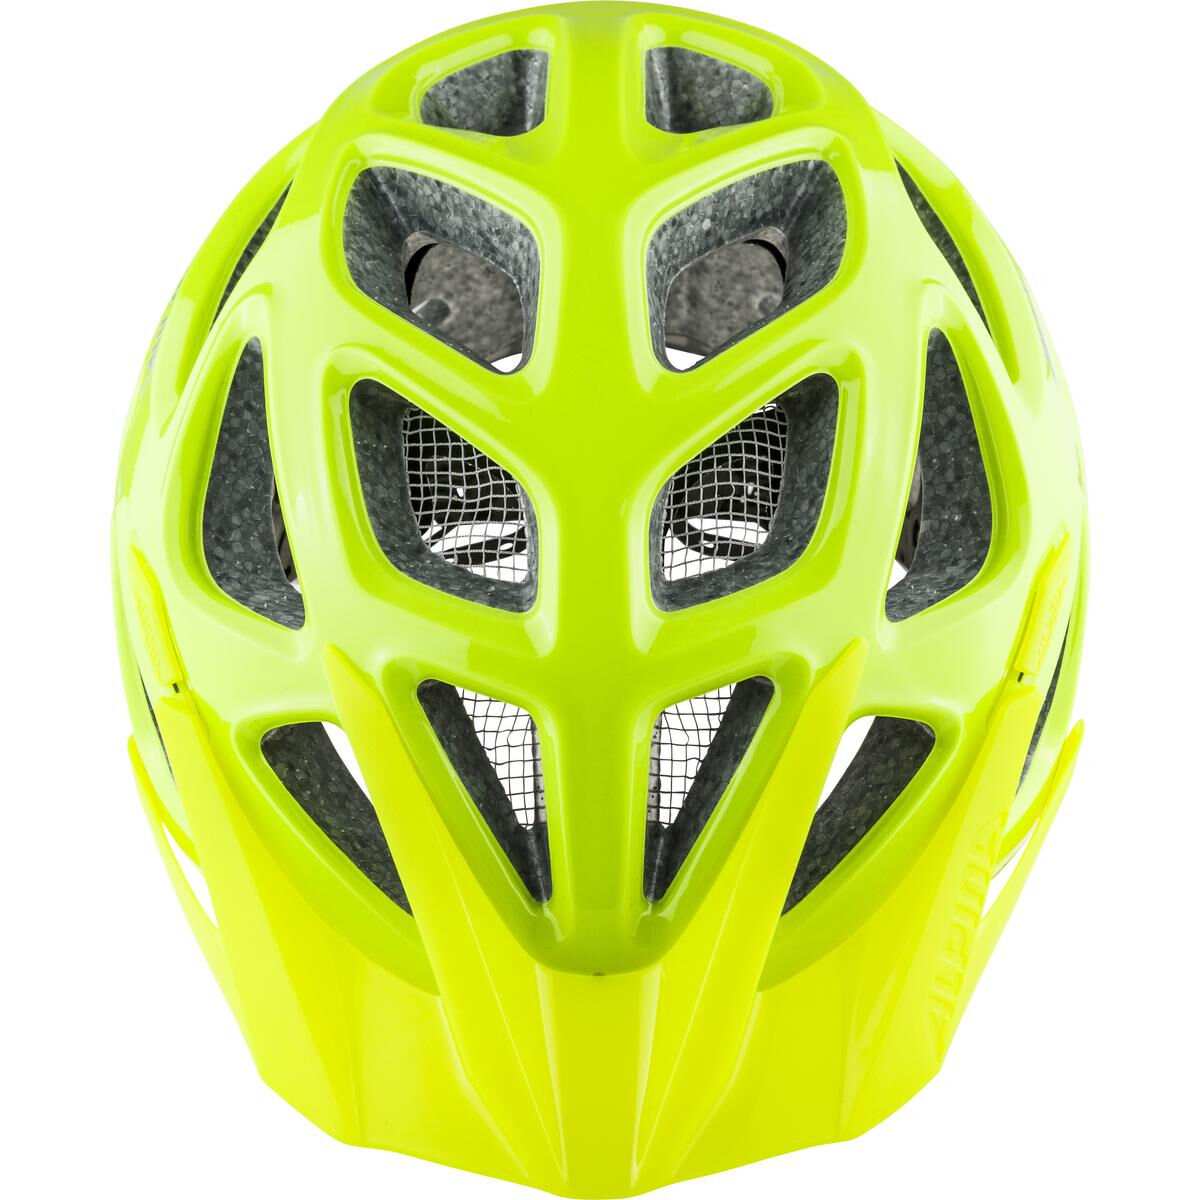 Adult's Cycling Helmet Alpina Mythos 3.0 LE Green 52/57